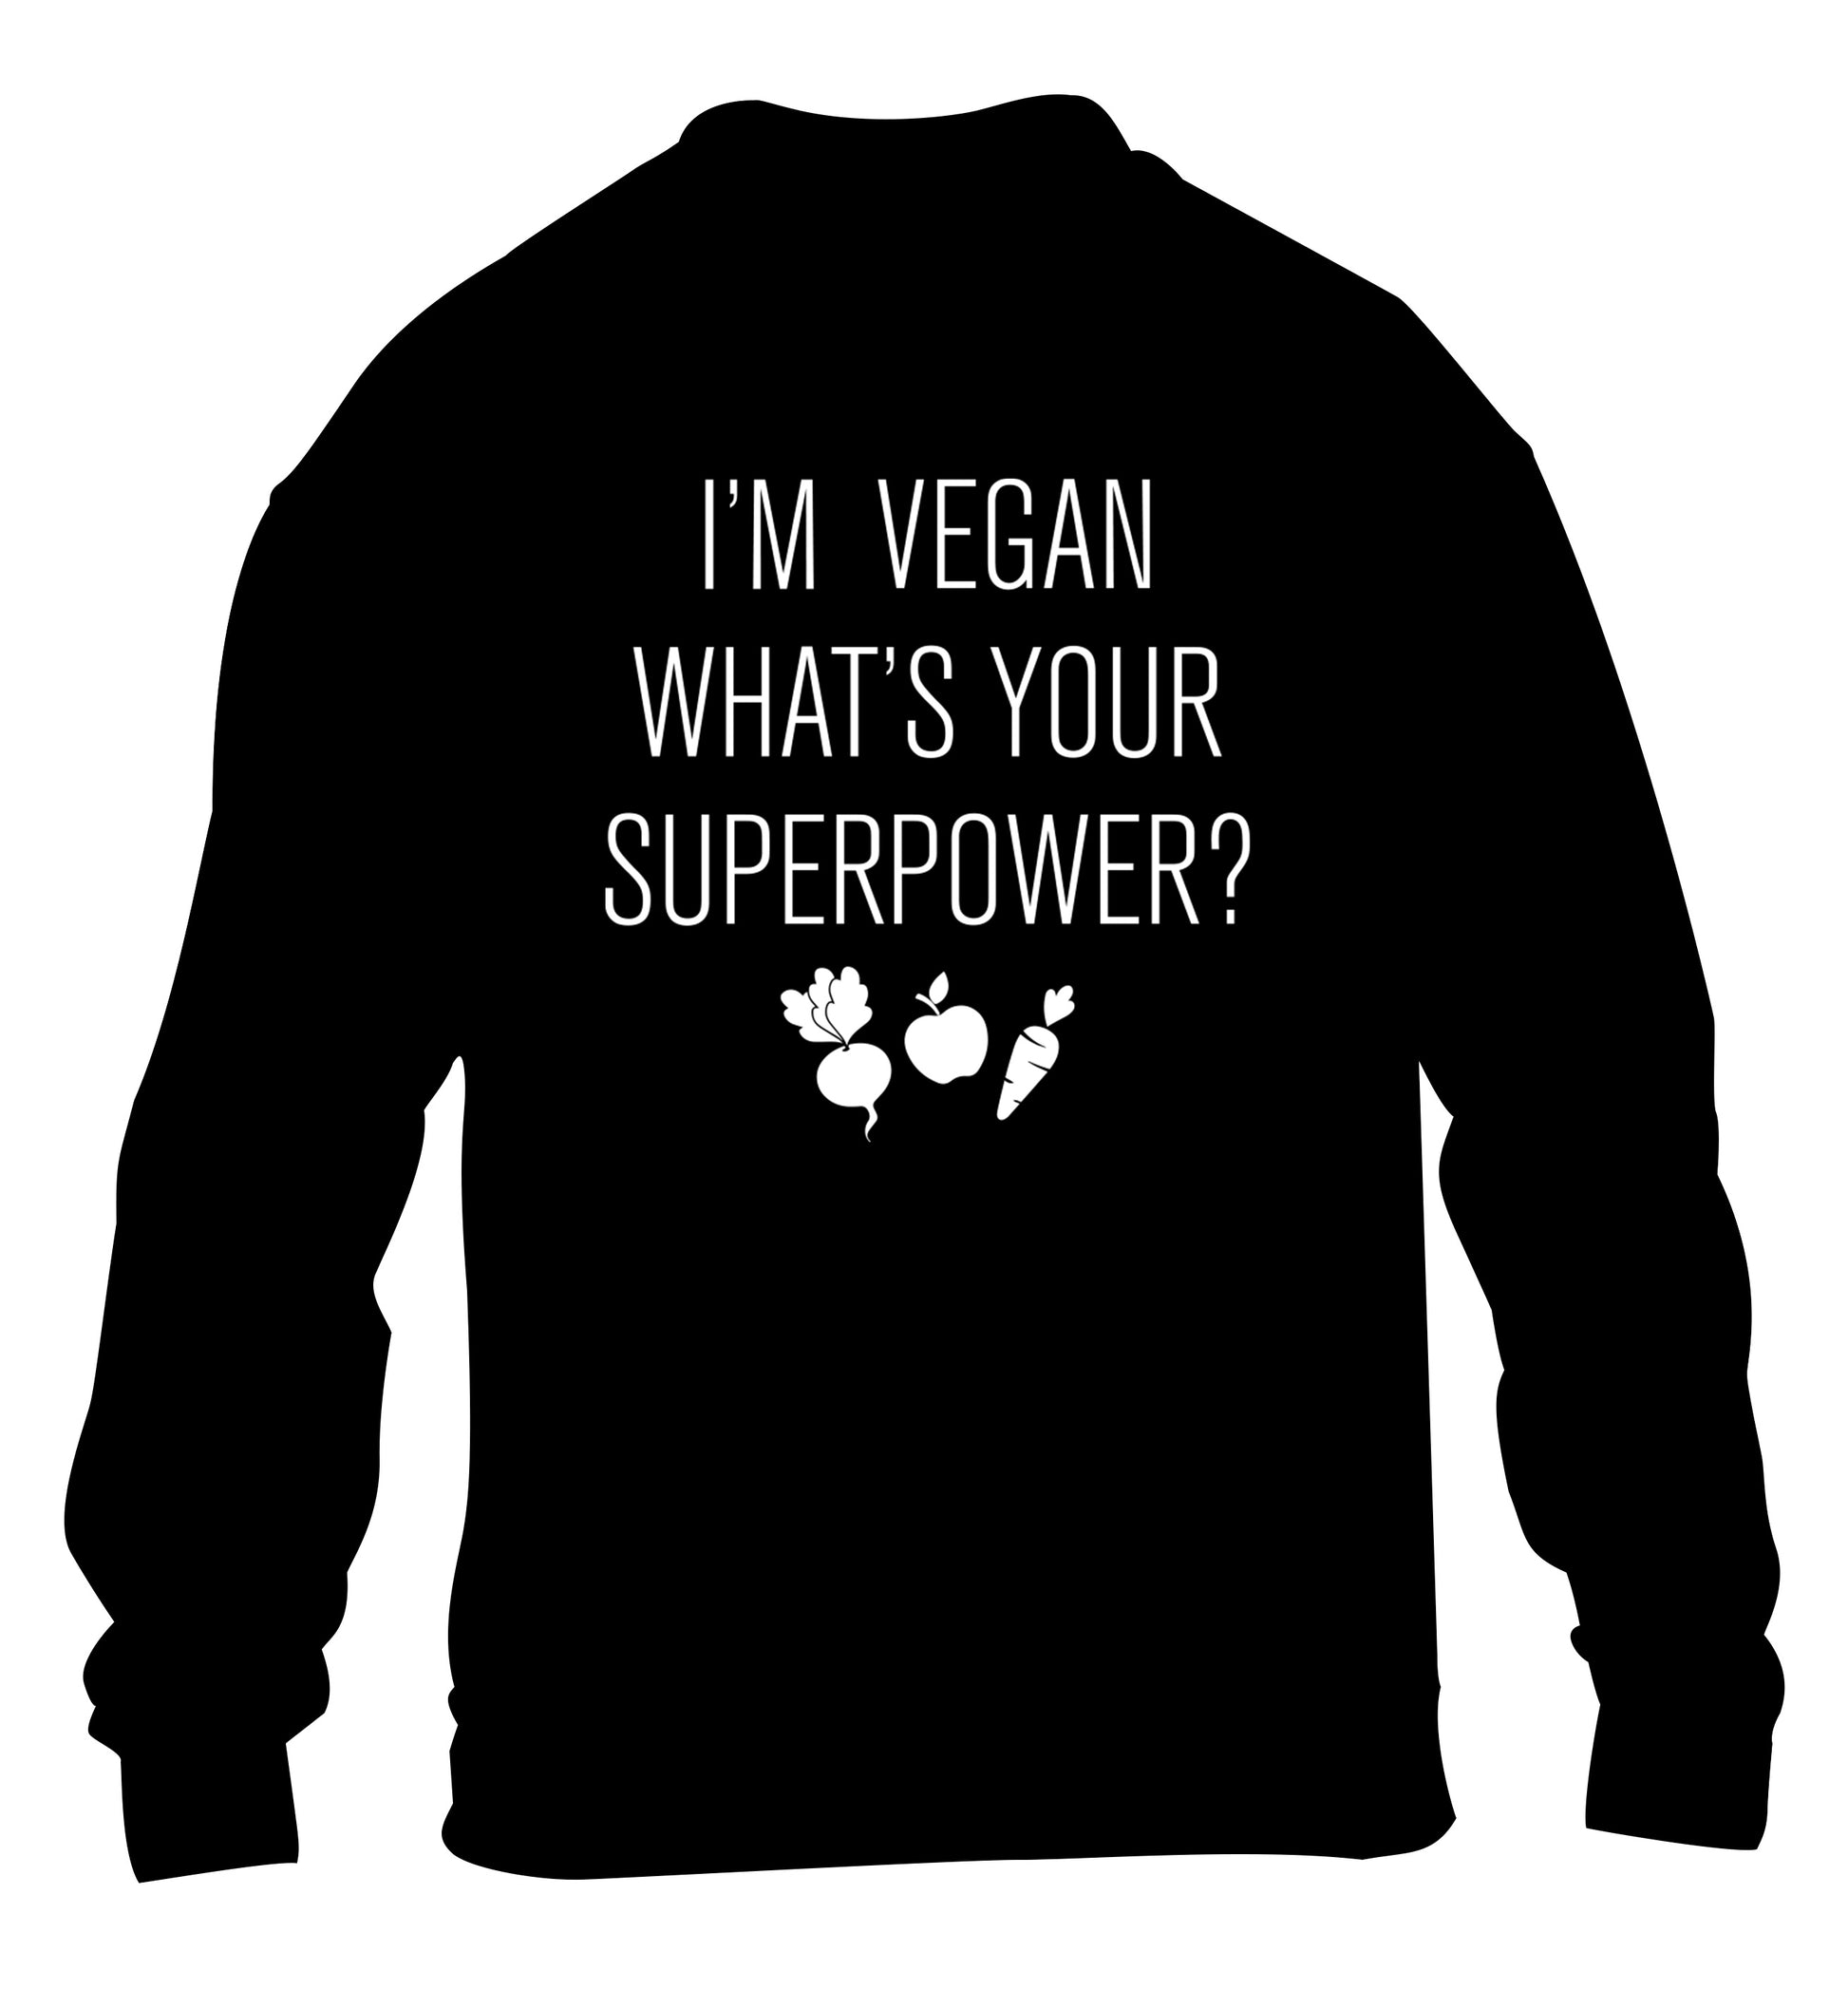 I'm Vegan What's Your Superpower? children's black sweater 12-13 Years